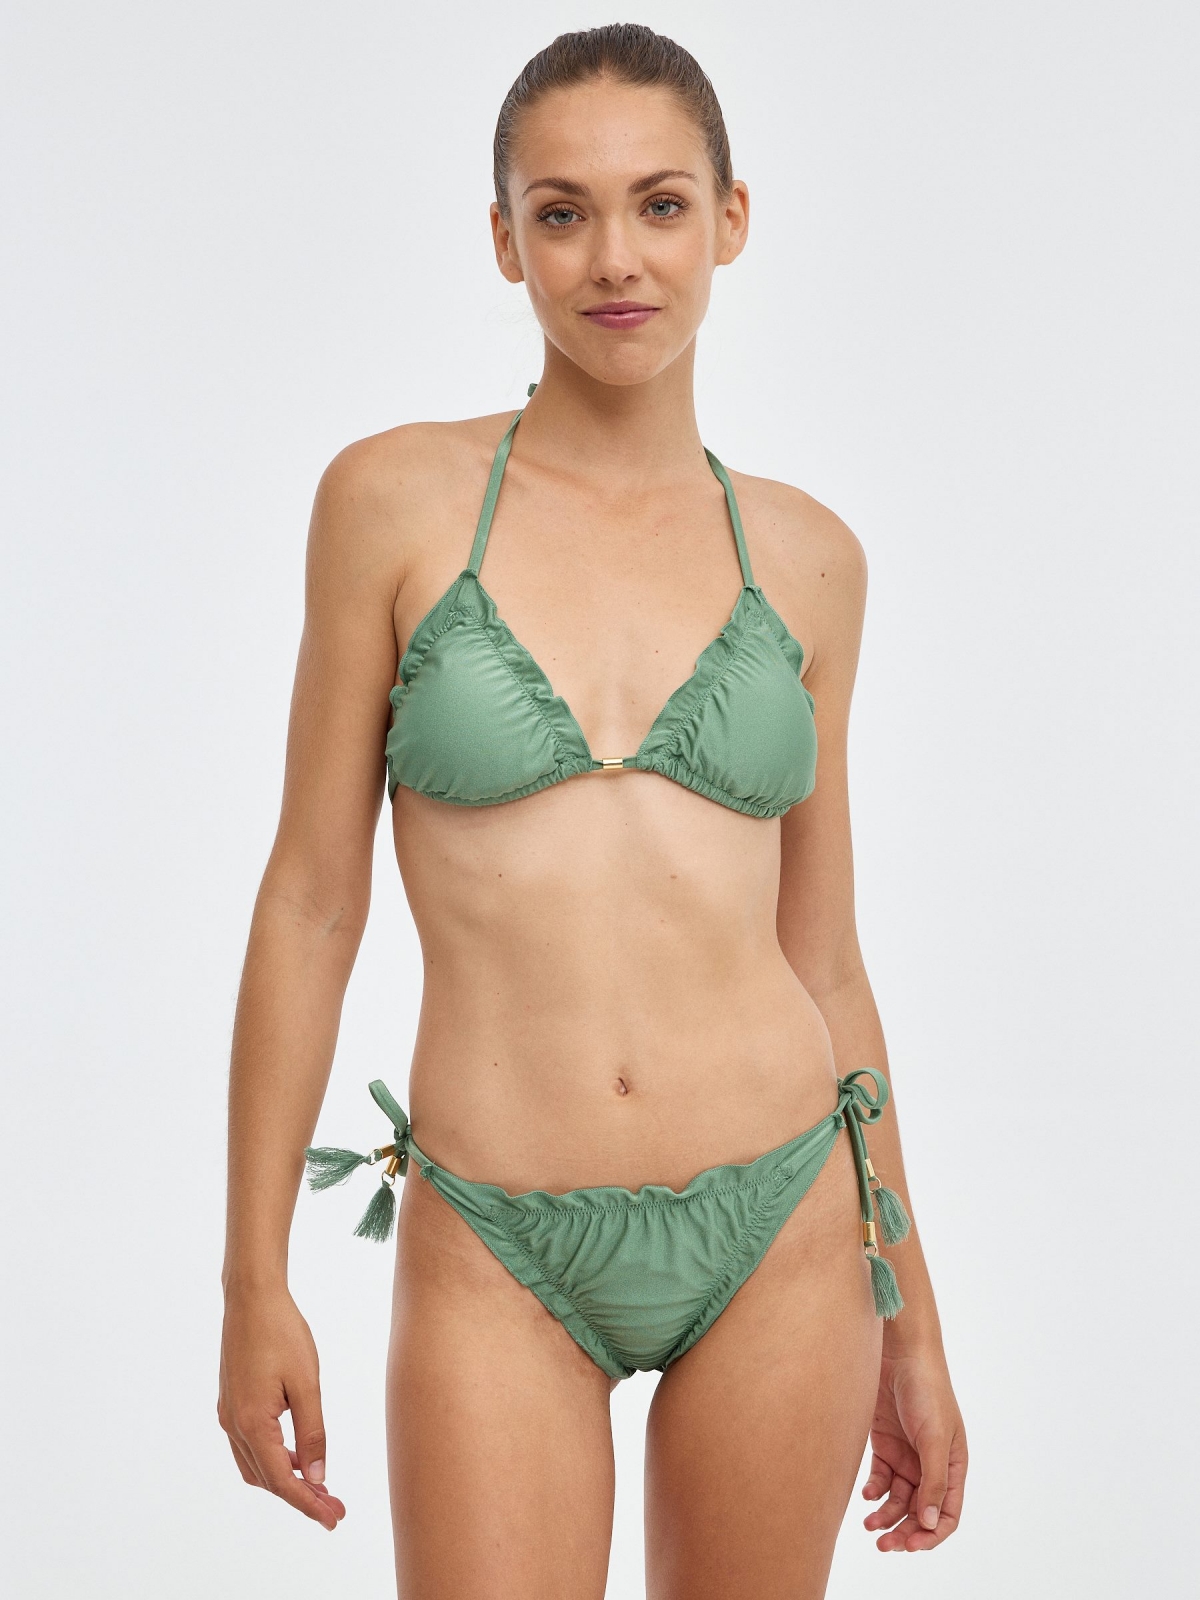 Braguita bikini efecto metalizado verde mar vista media frontal